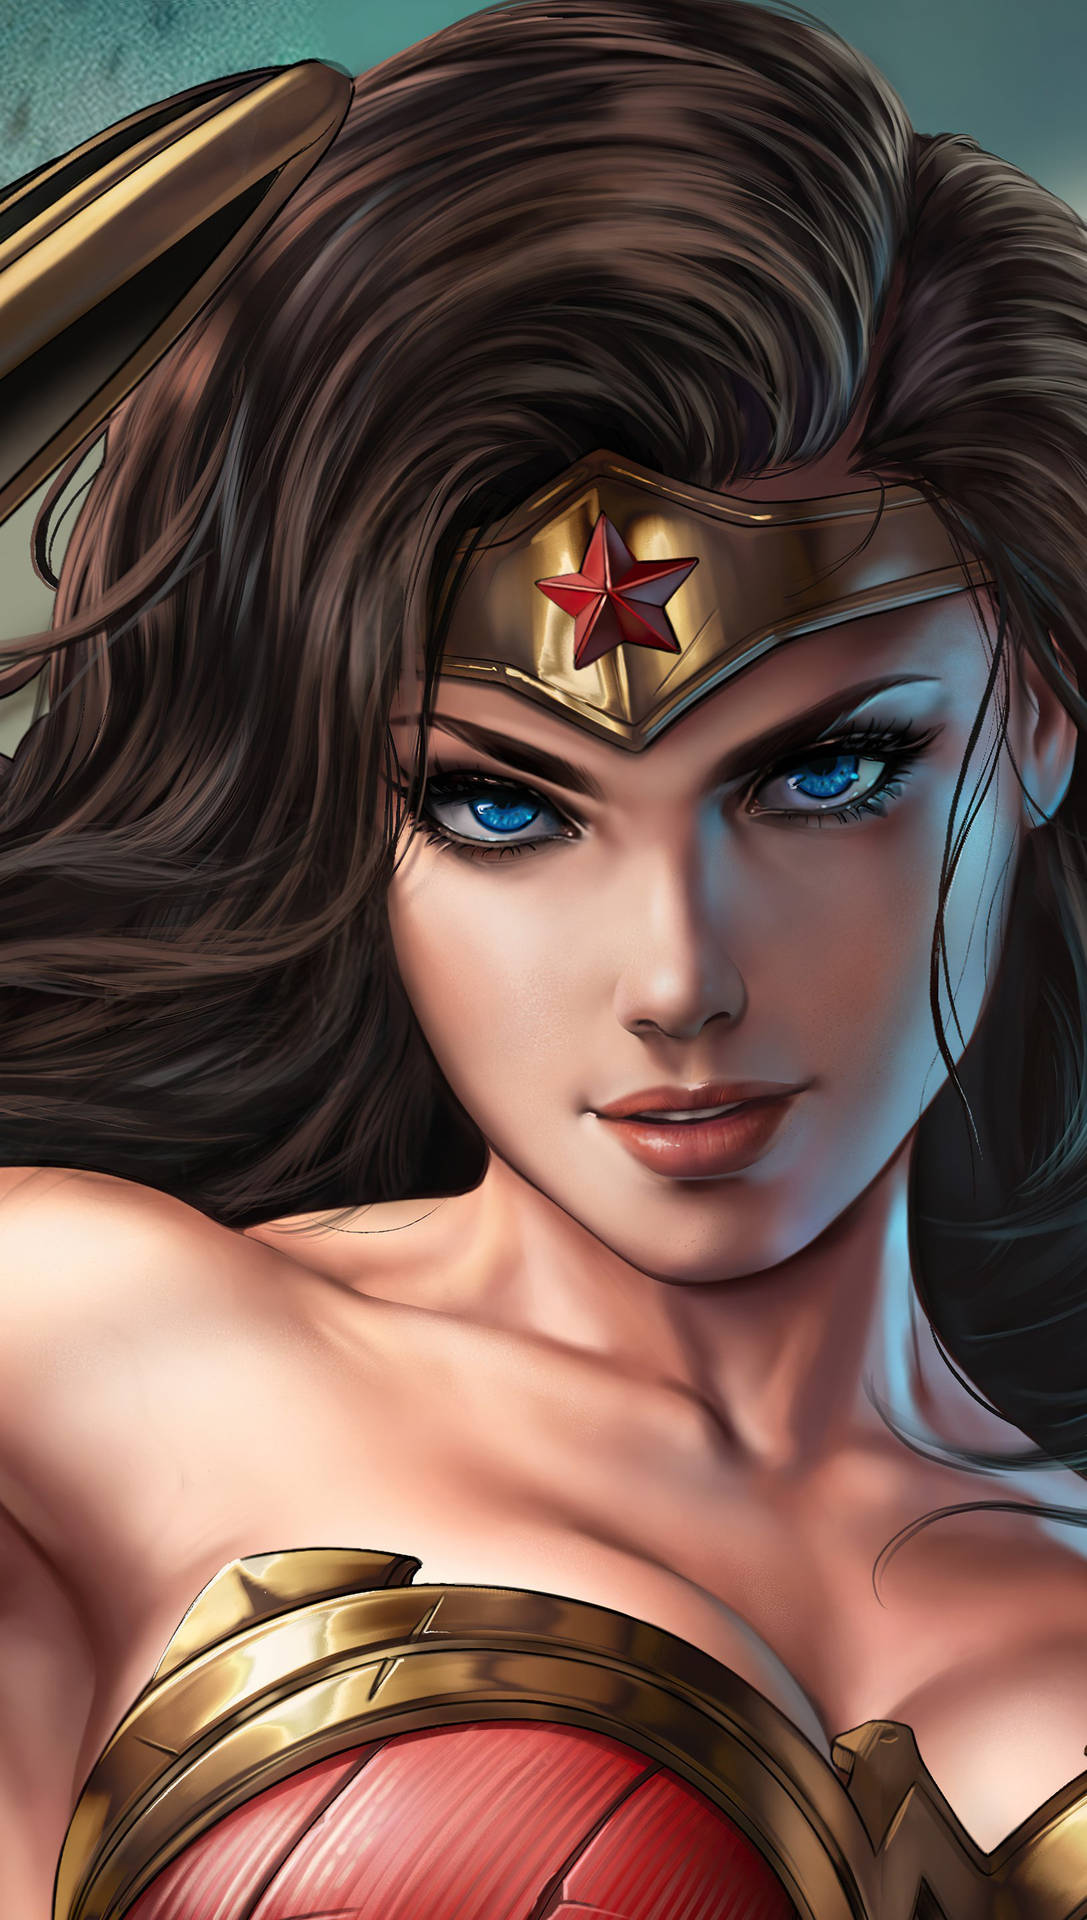 Cute Wonder Woman Digital Art Wallpaper